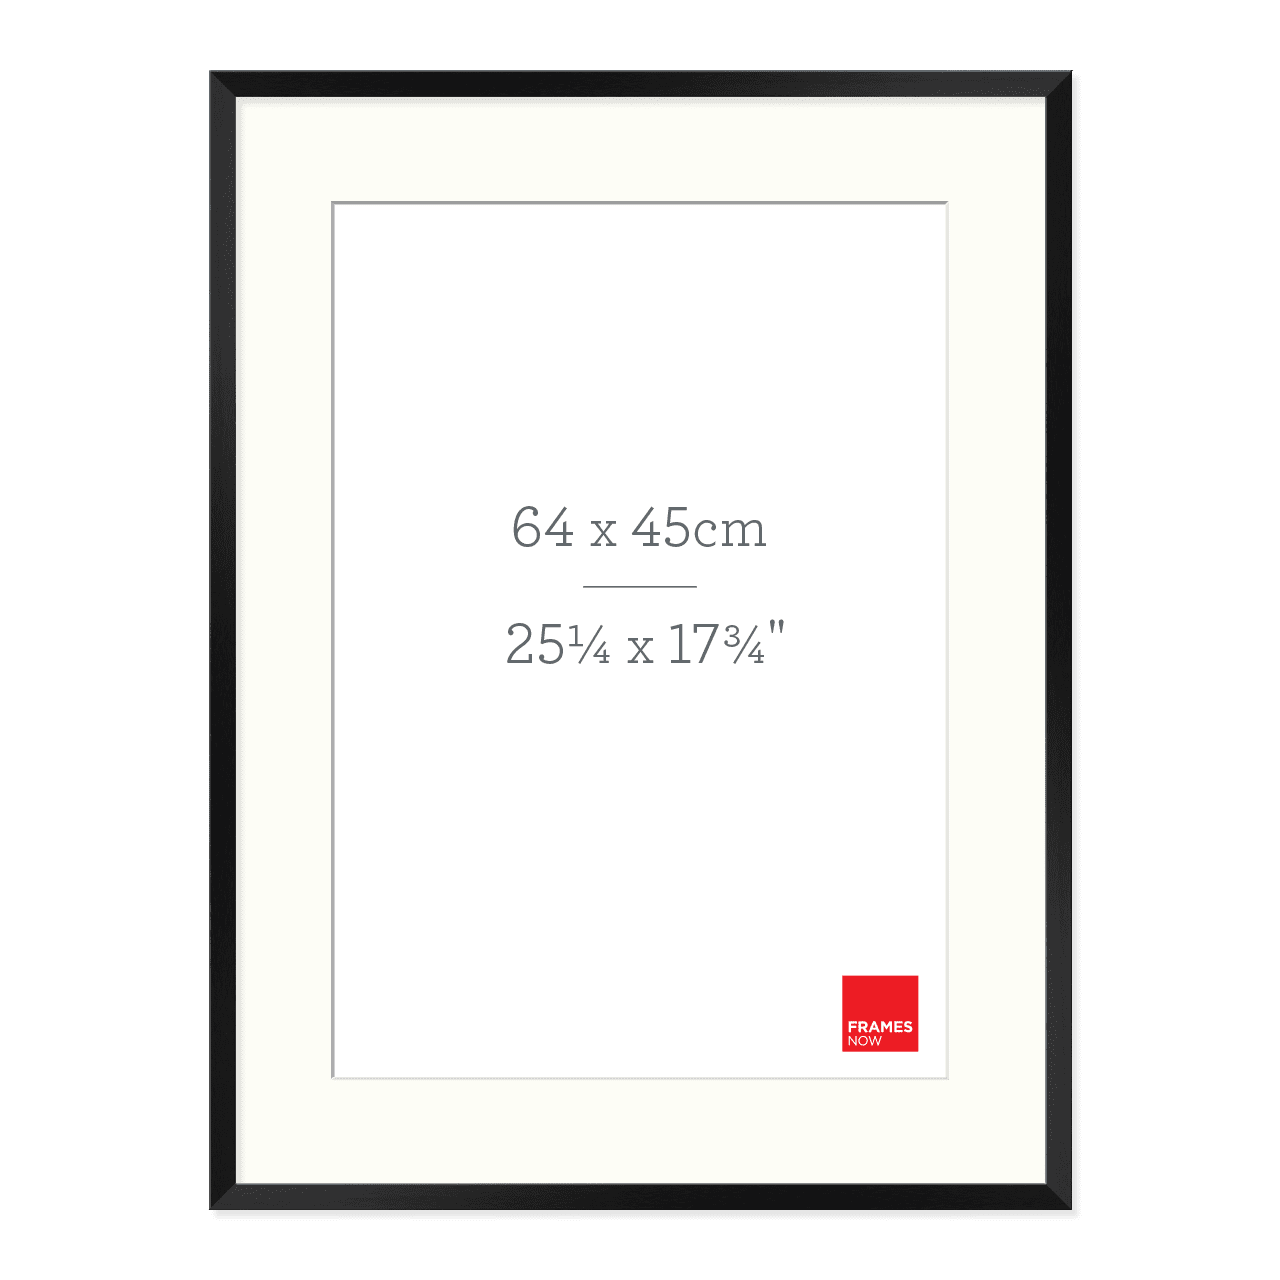 Premium Matte Black Box Picture Frame with Matboard for 64 x 45cm Artwork